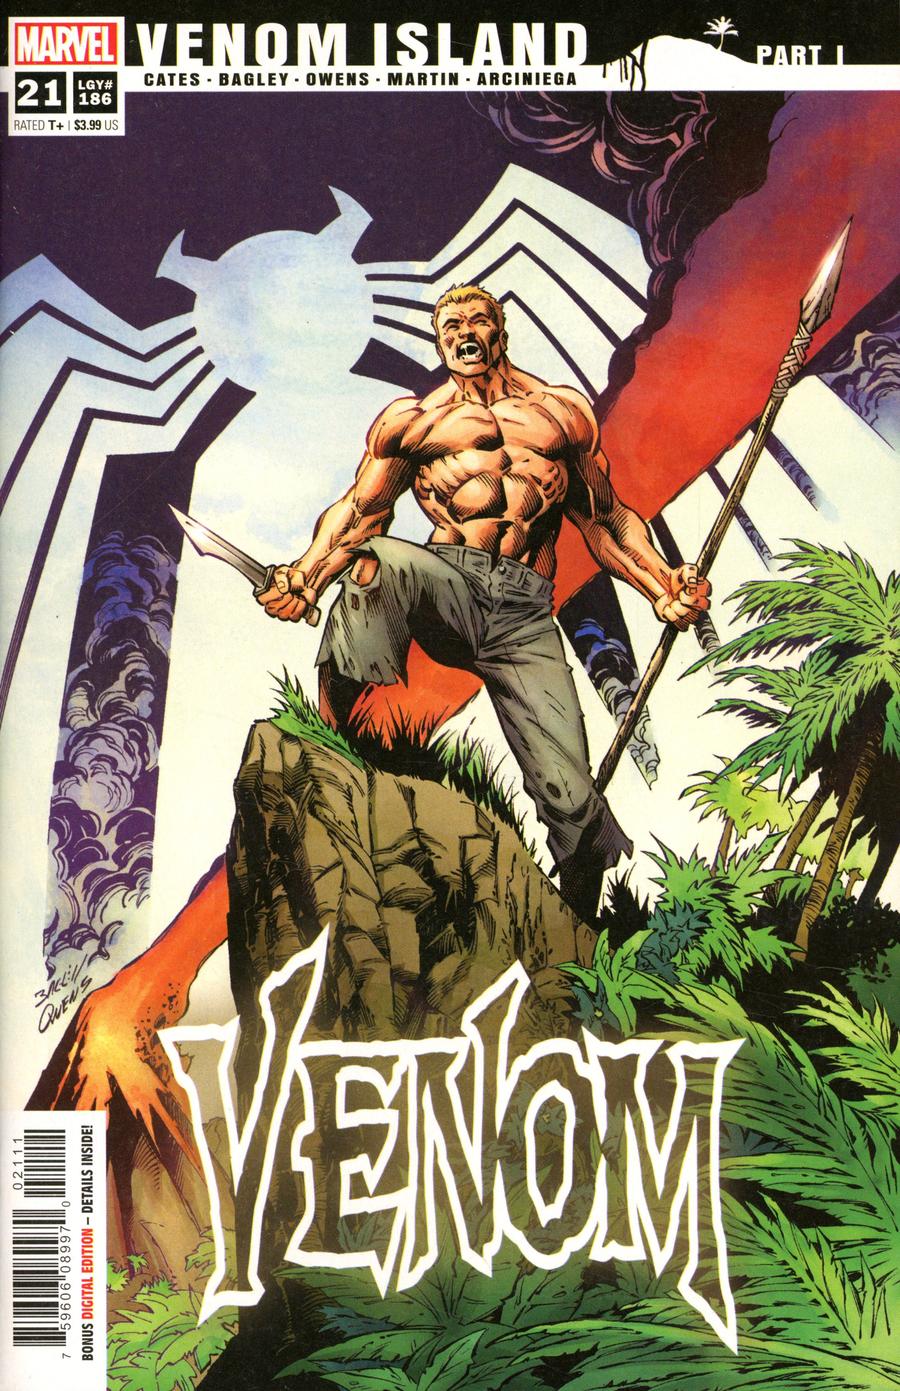 Venom Vol 4 #21 Cover A 1st Ptg Regular Mark Bagley Cover